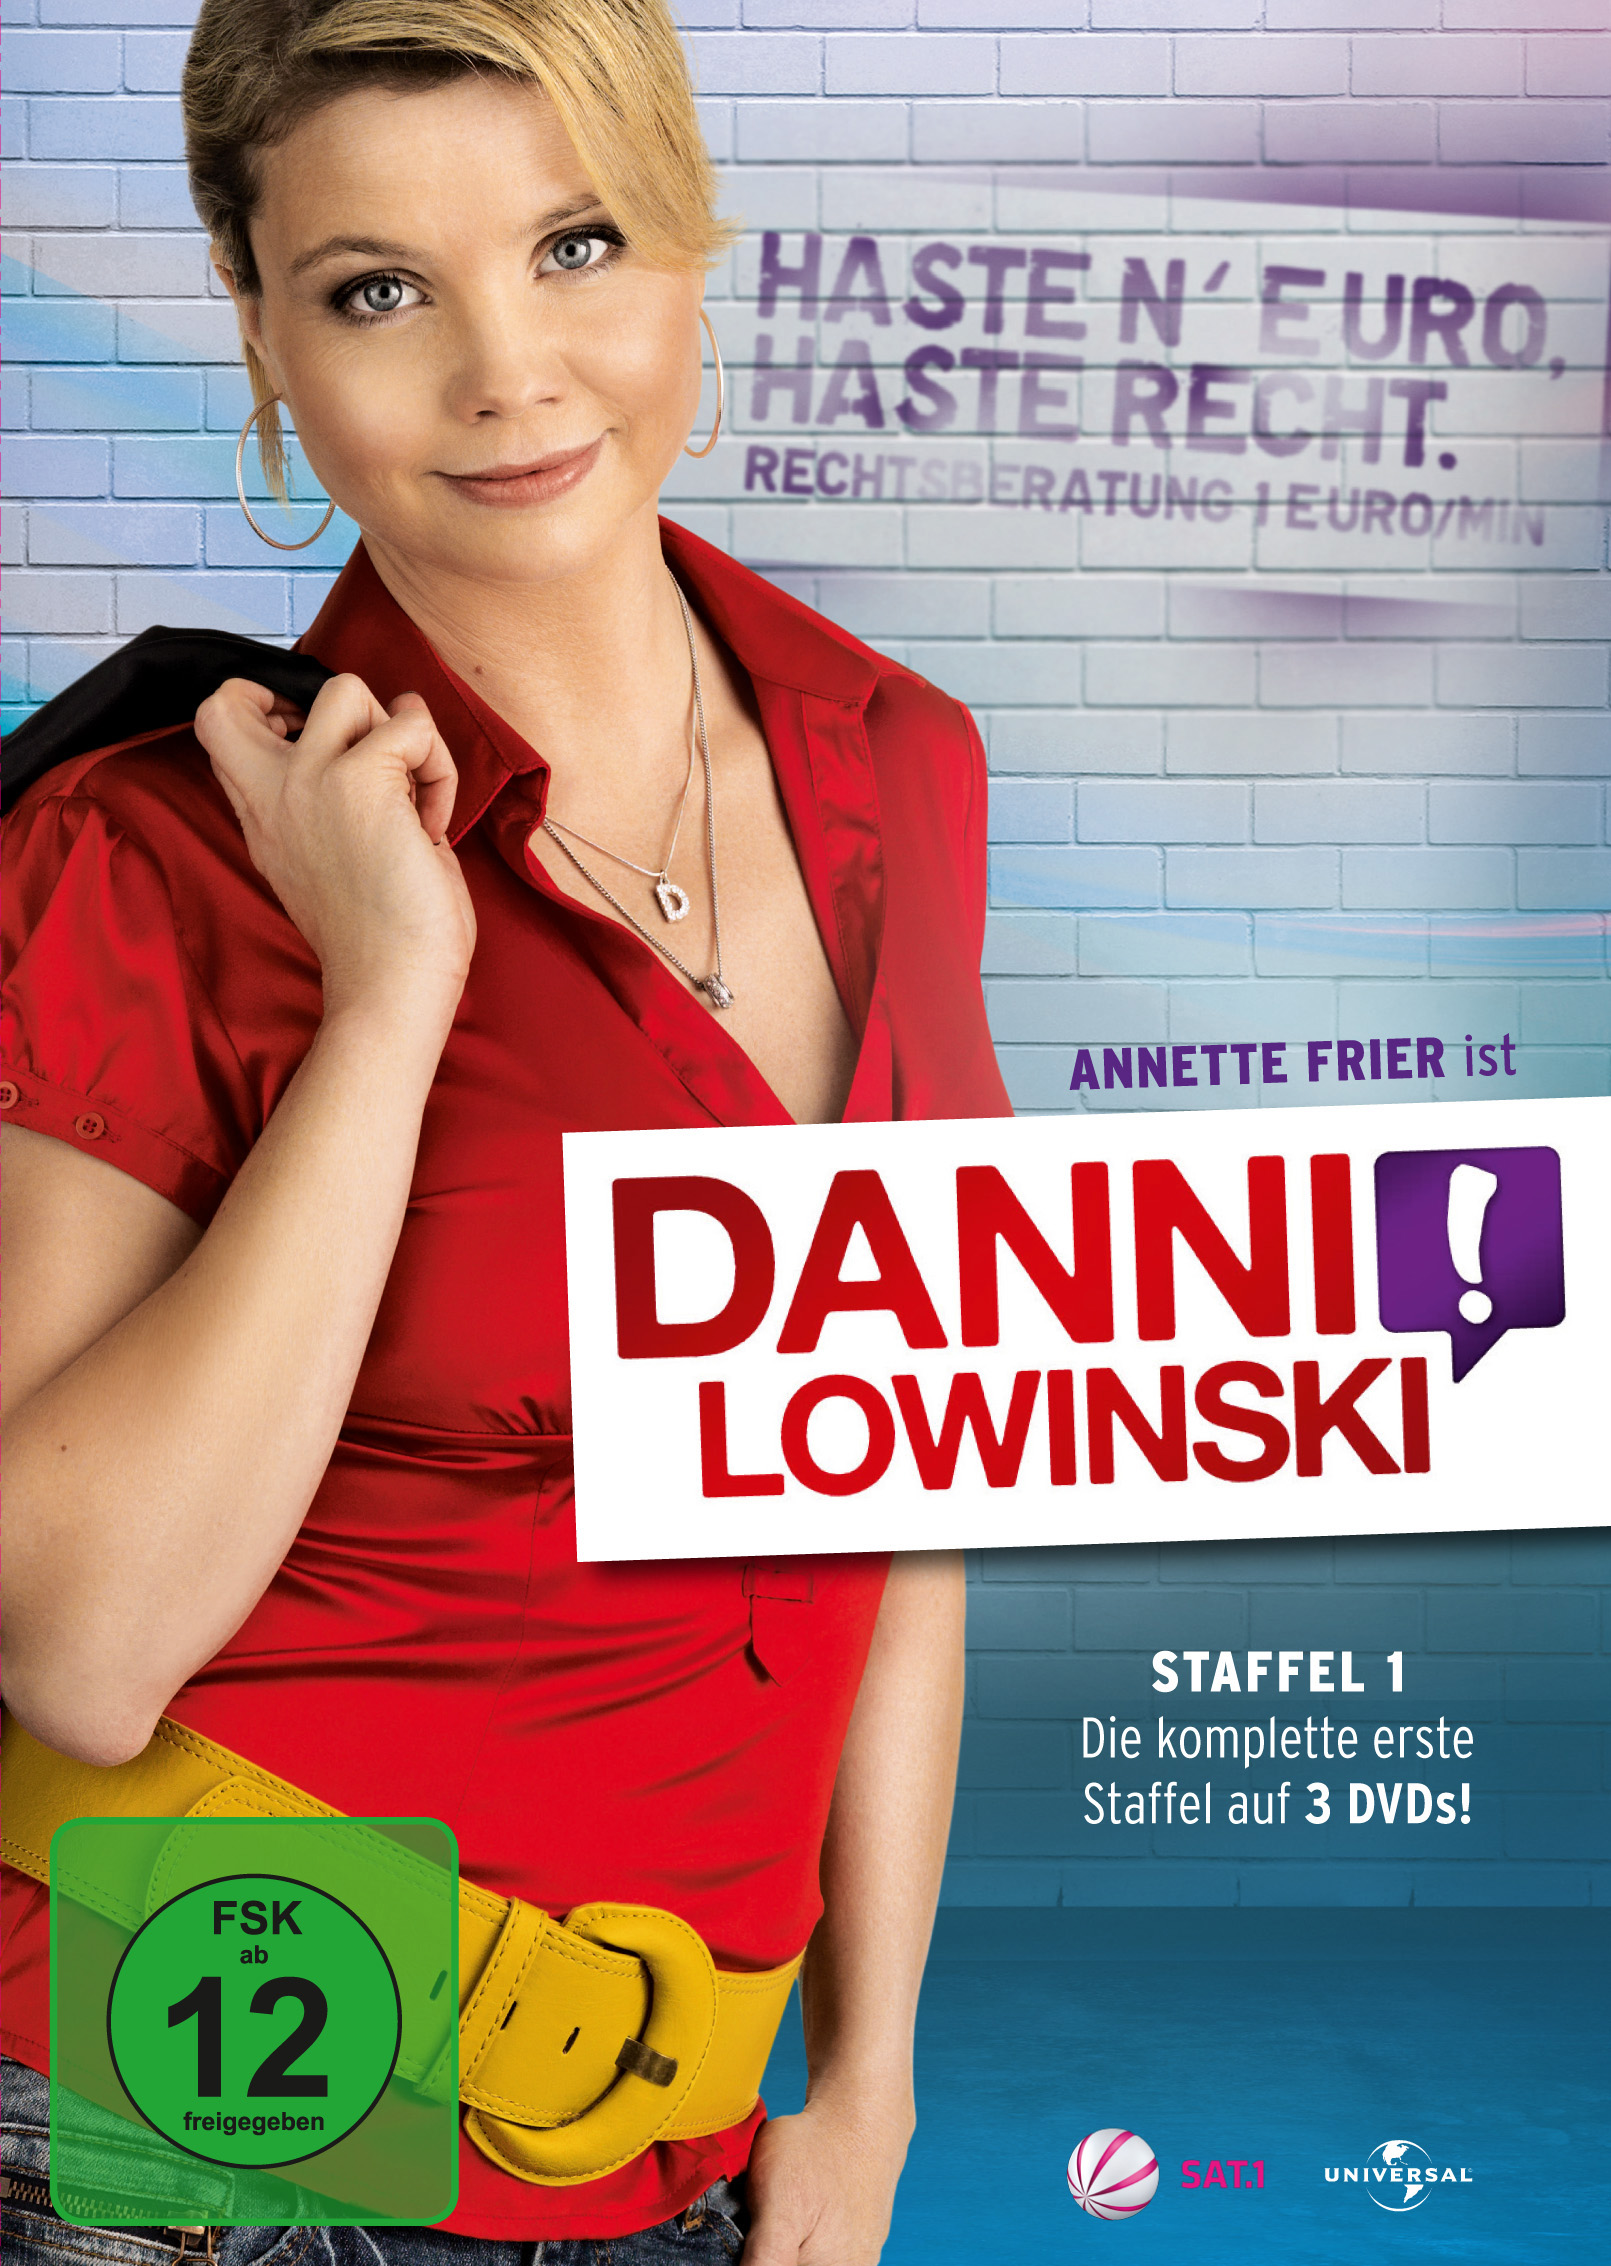 Danni Lowinski movie